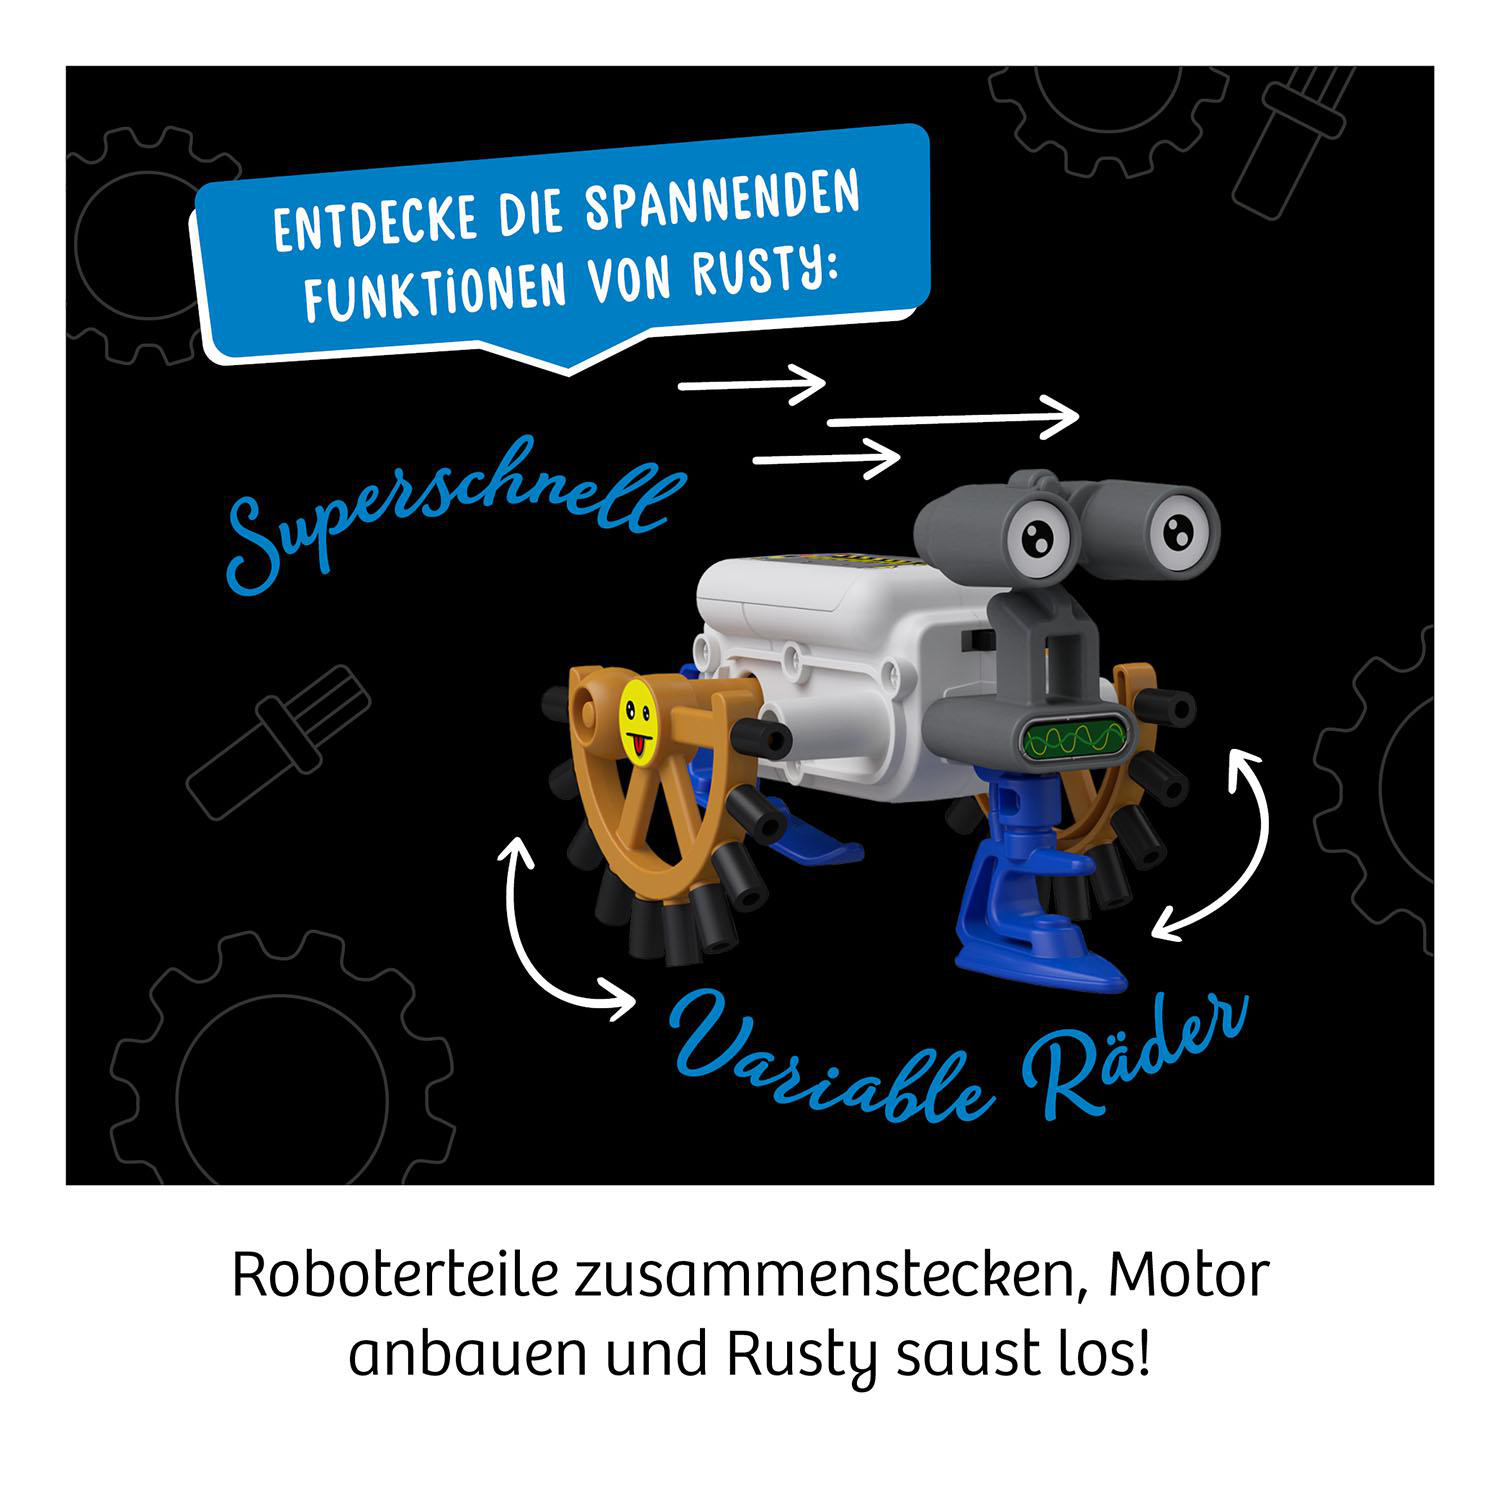 Spielzeug-Roboter, - KOSMOS ReBotz Rusty der Mehrfarbig Crawling-Bot